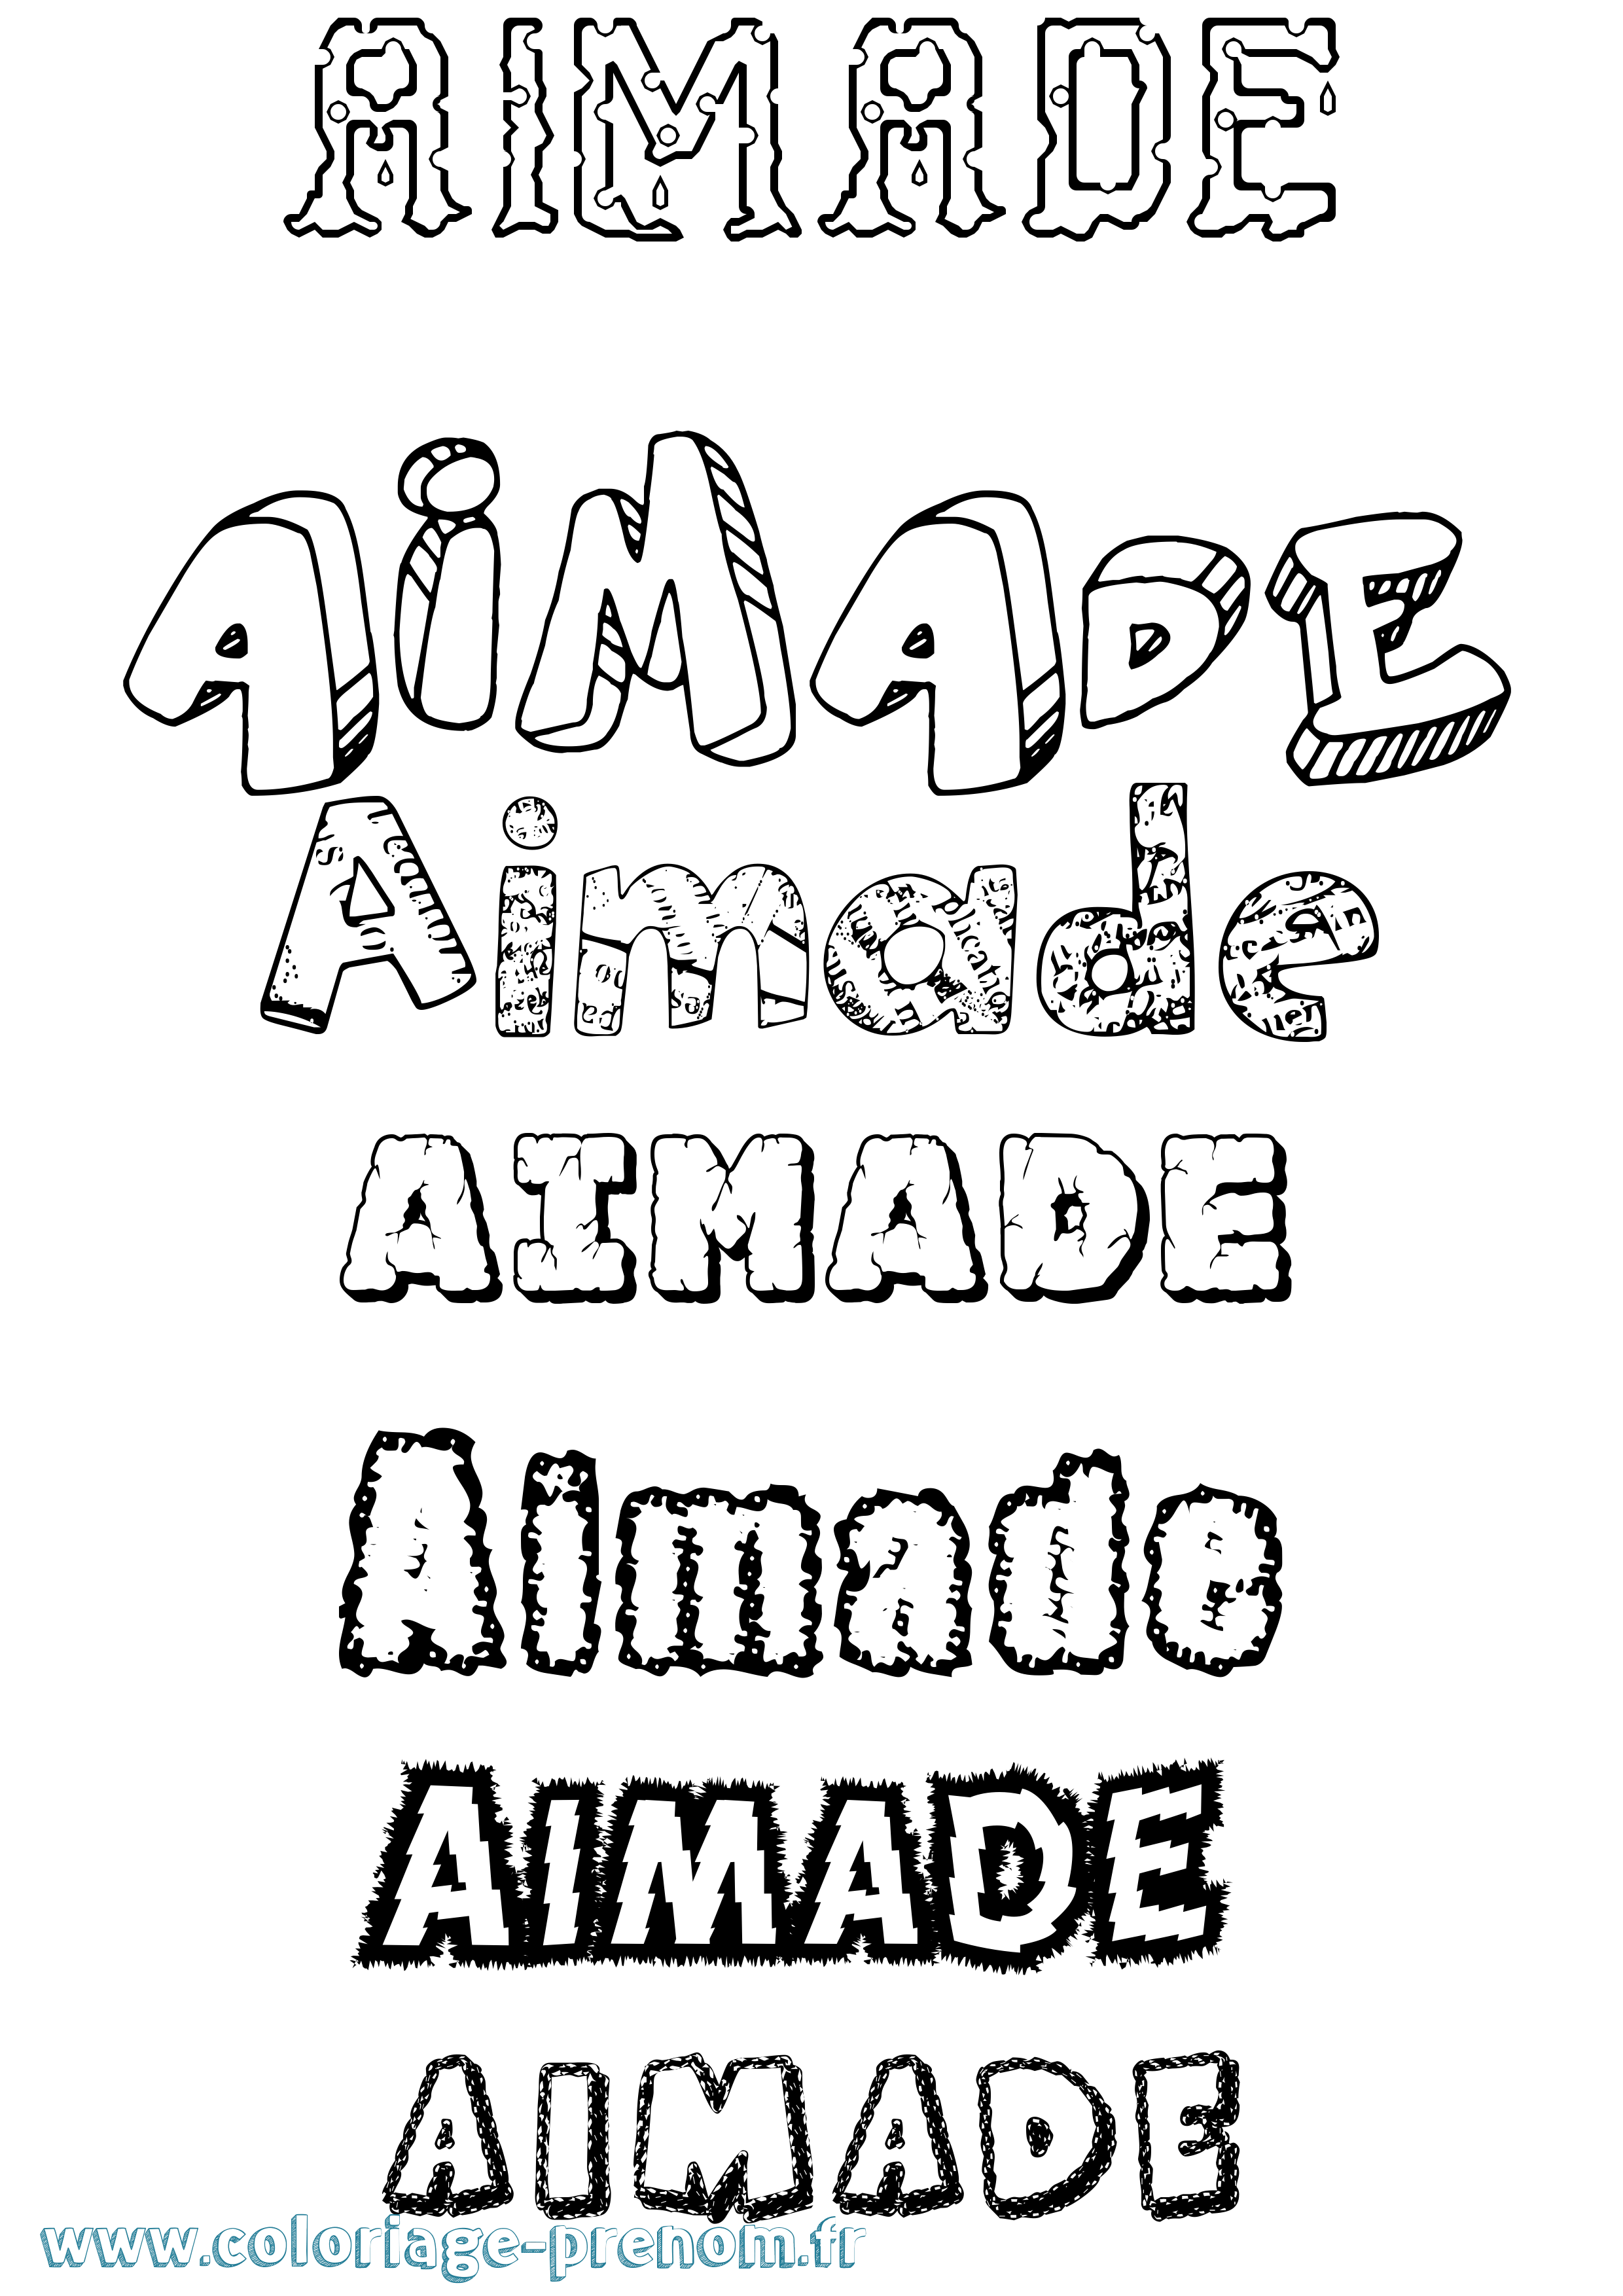 Coloriage prénom Aimade Destructuré